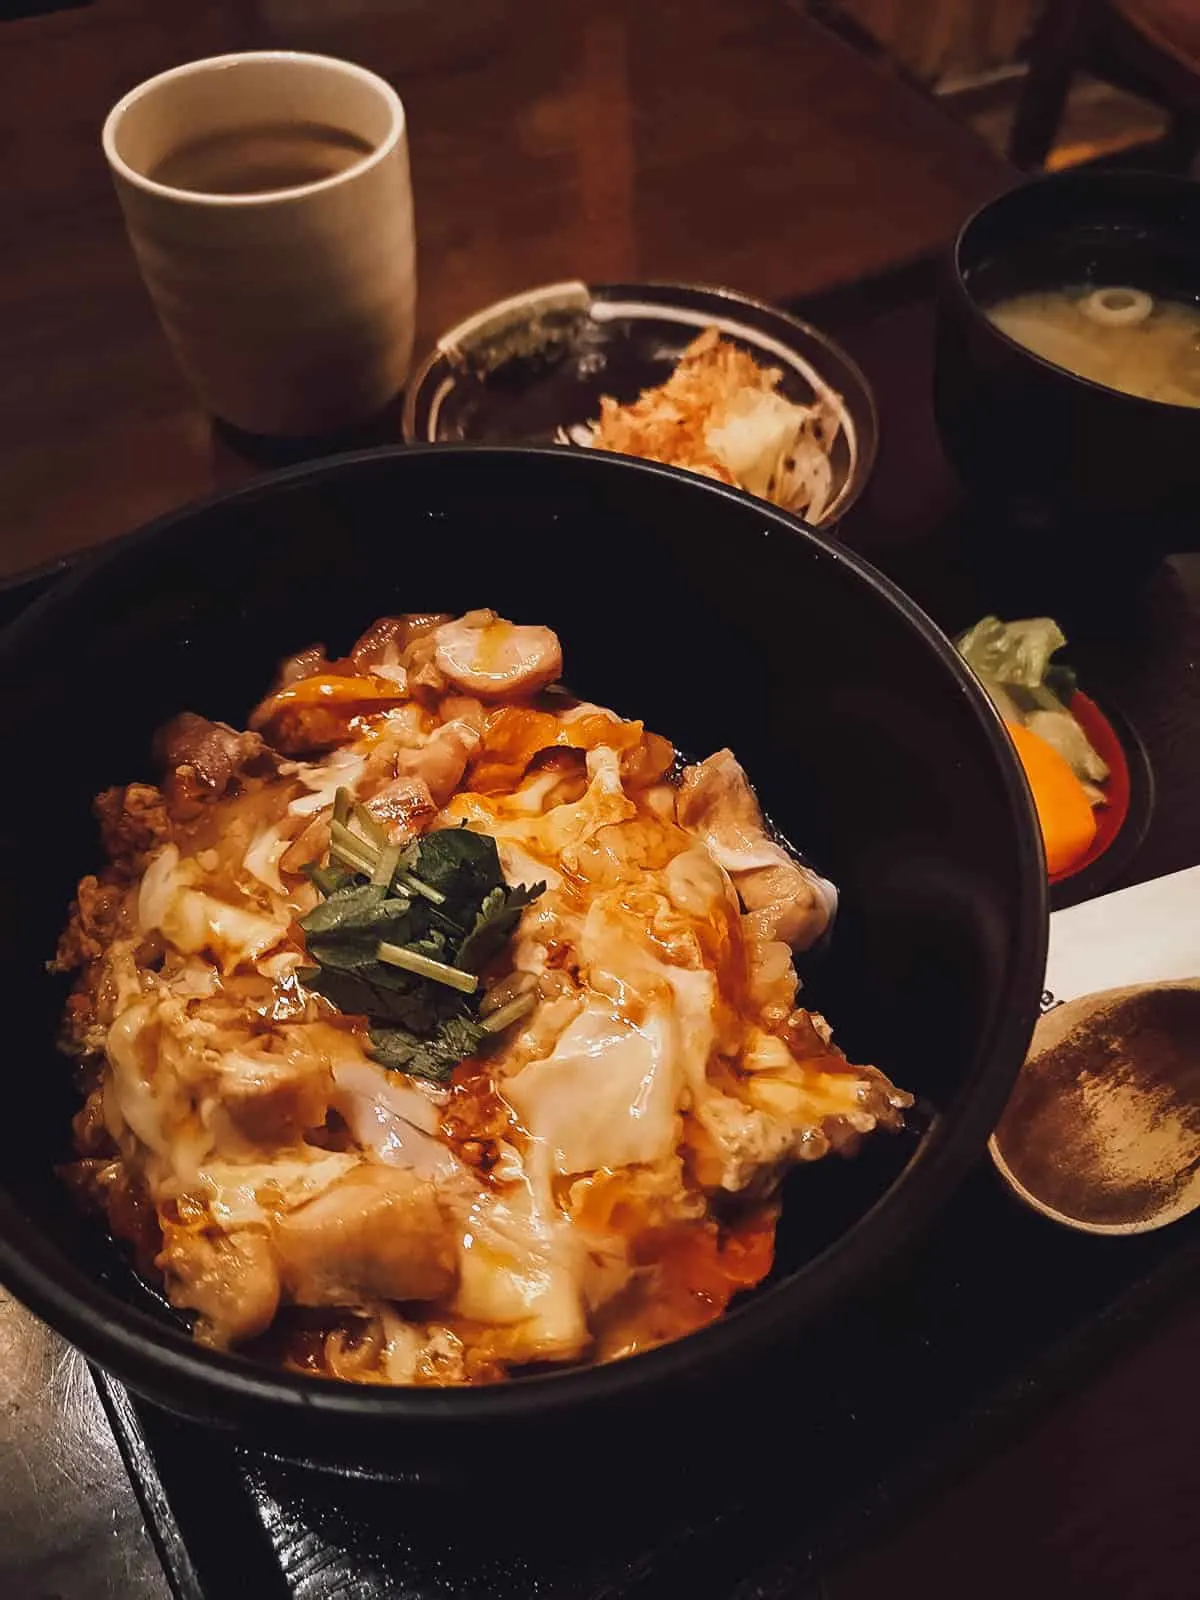 Tamago kake gohan, a popular raw egg and rice comfort food in Japan